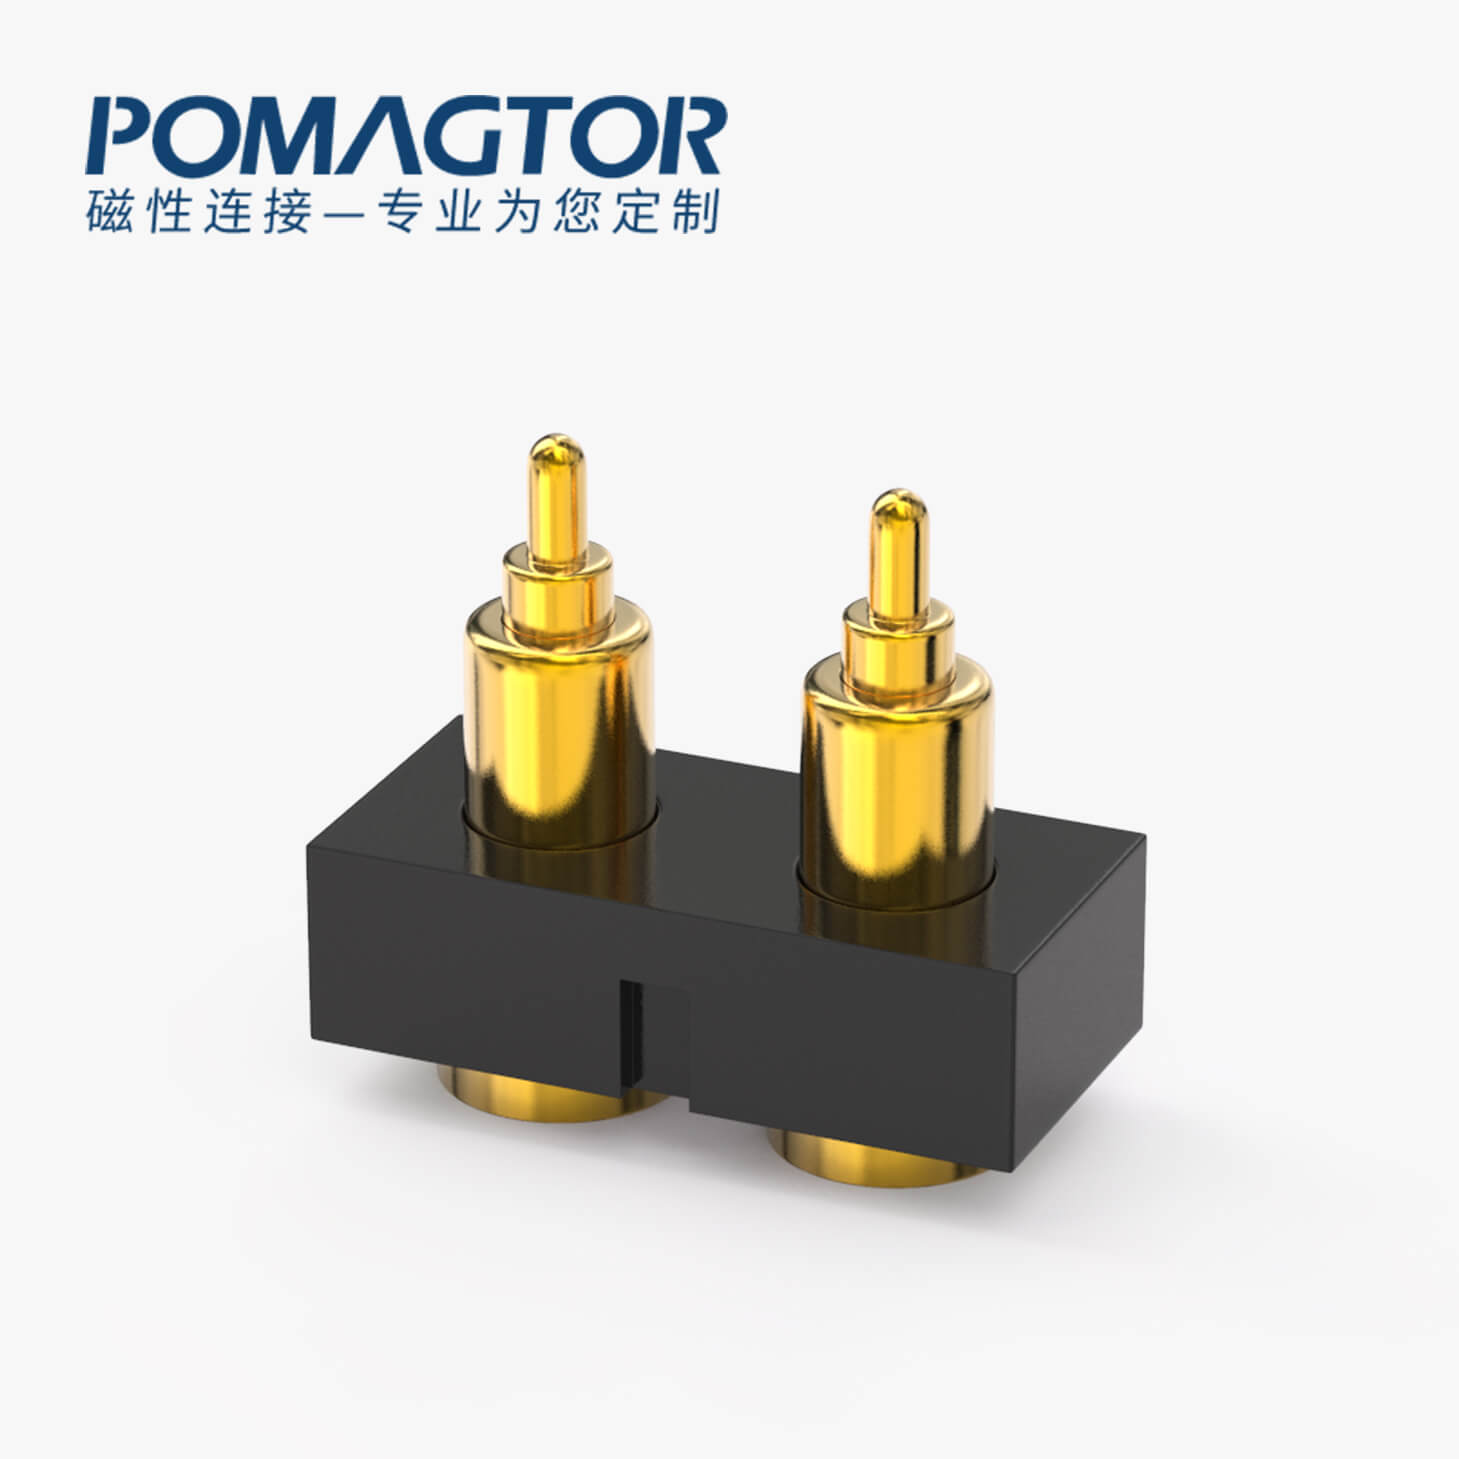 POGO PIN连接器 SMT式：2PIN，电镀黄铜Au3u，电压12V，电流1.2A，工作行程0.8mm:150gfMax，弹力30000次+，工作温度-30°~85°